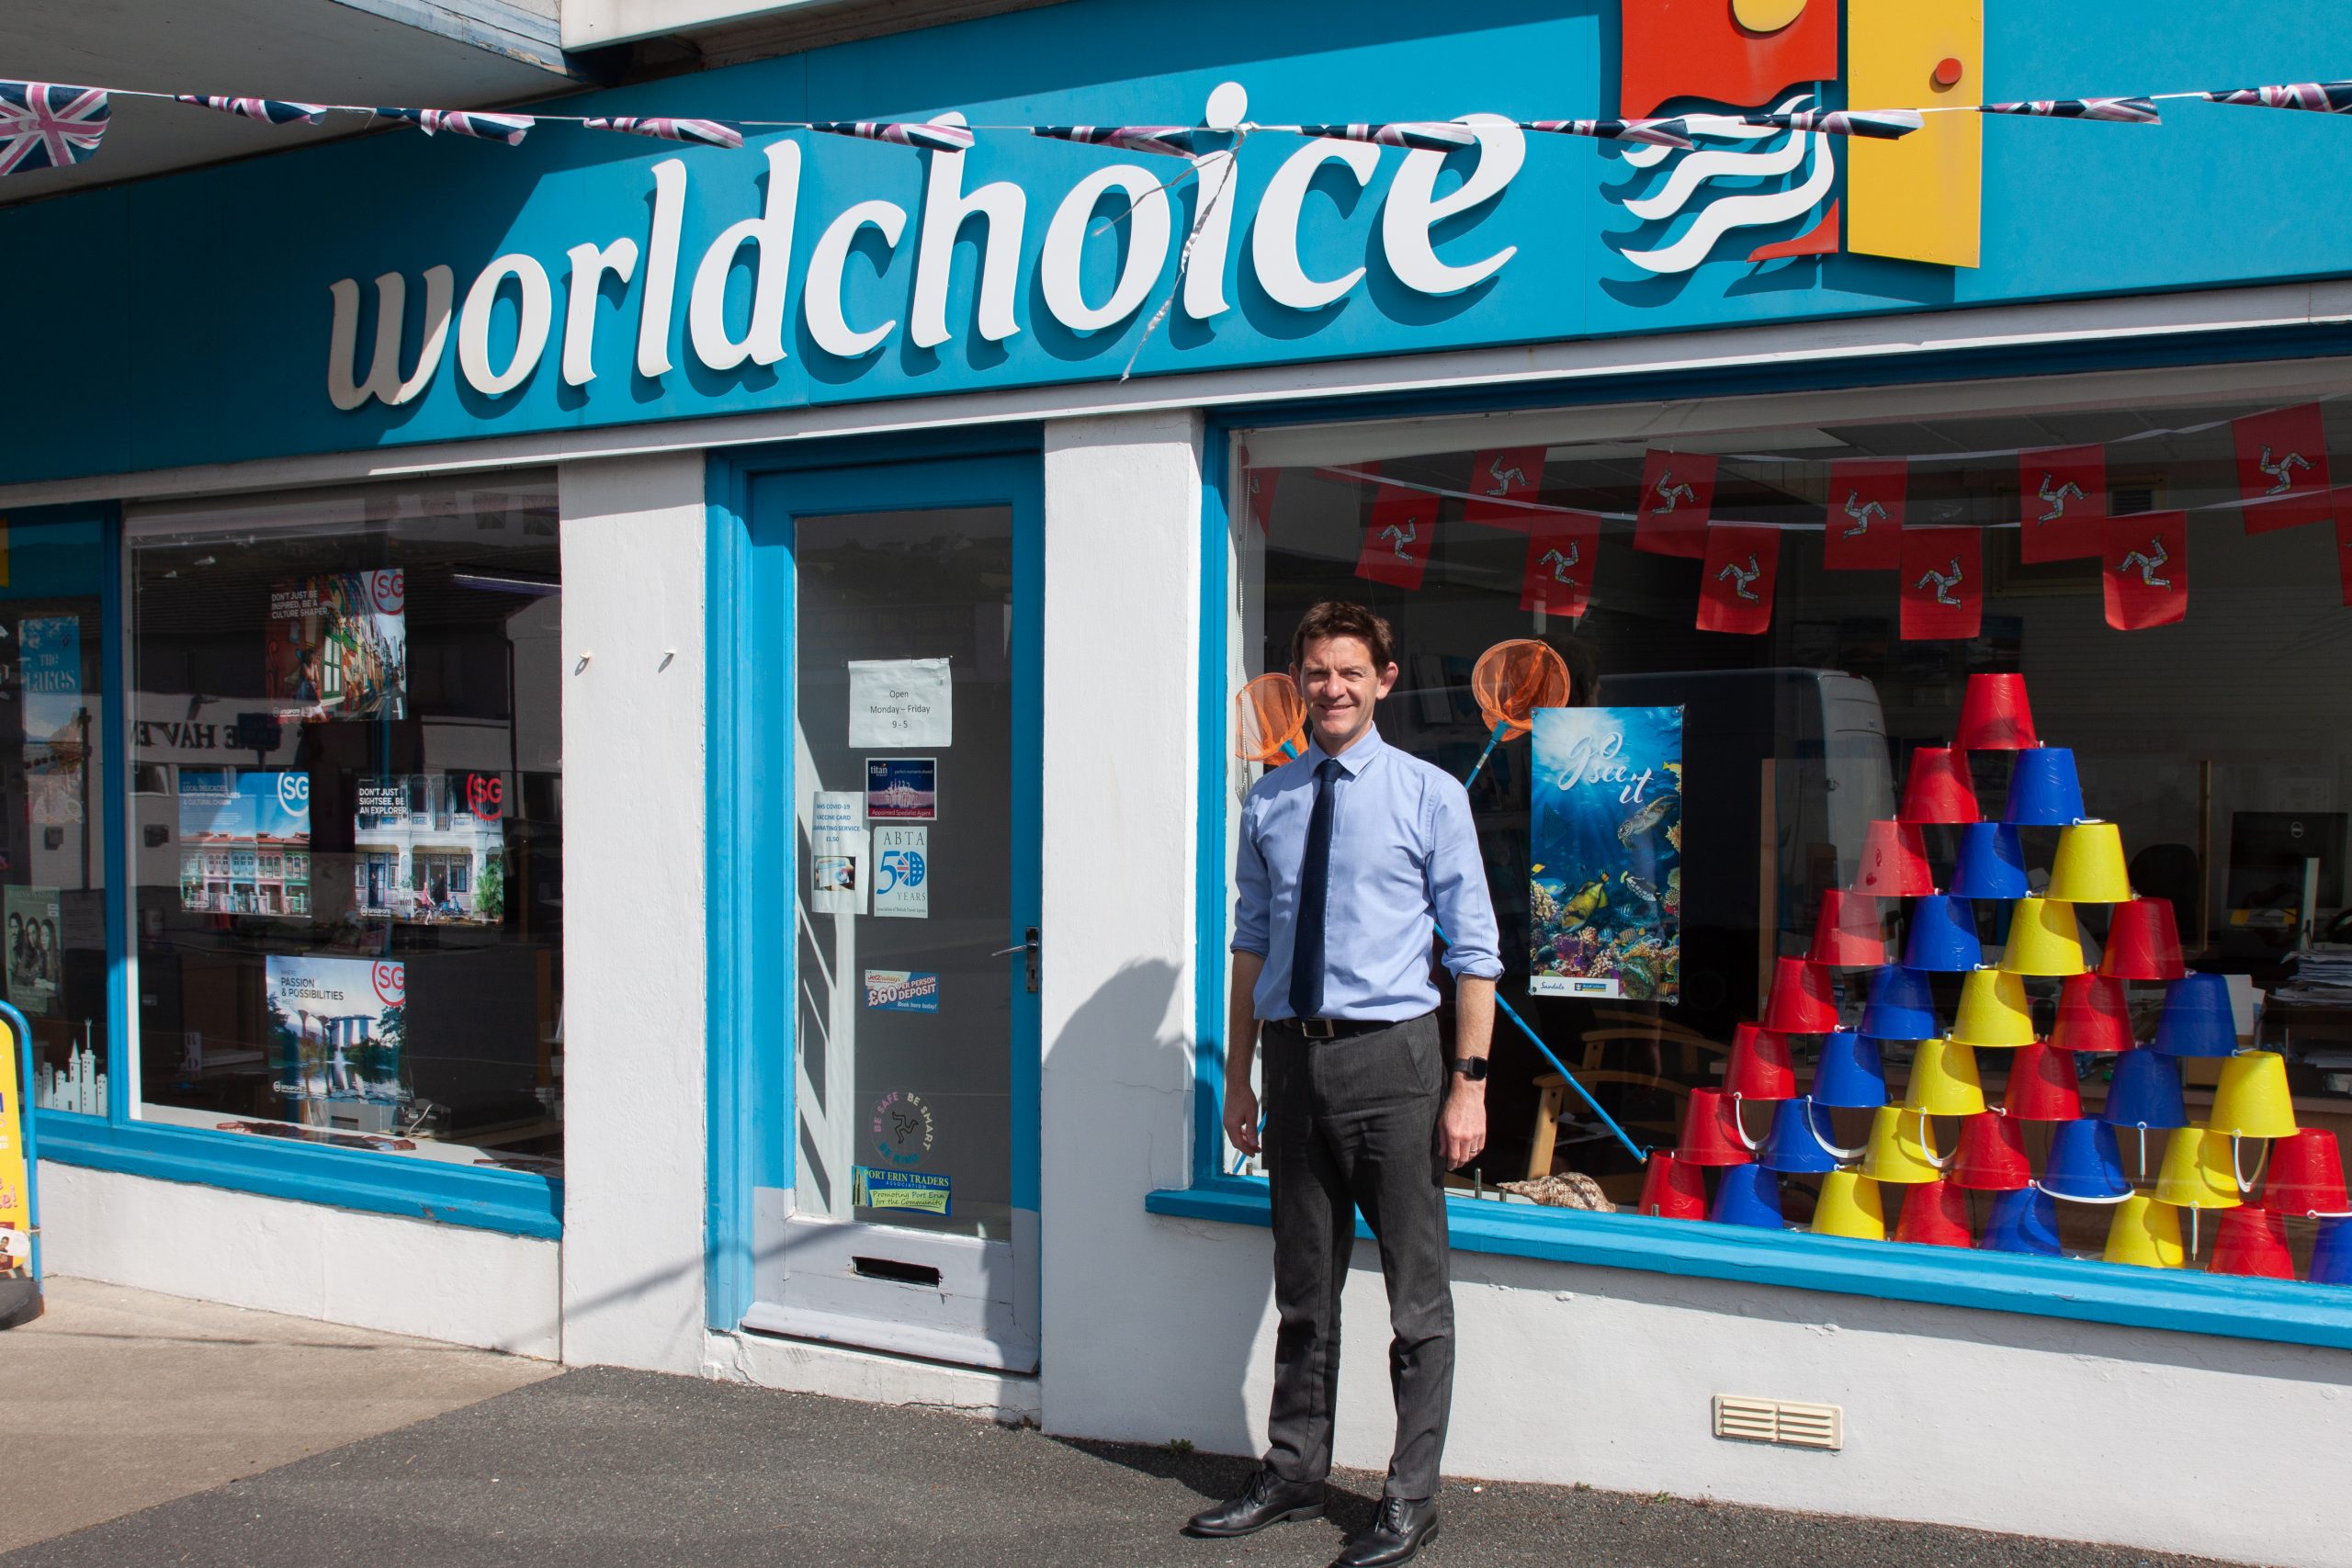 World Choice 39 Station Road, Port Erin IM9 6AW